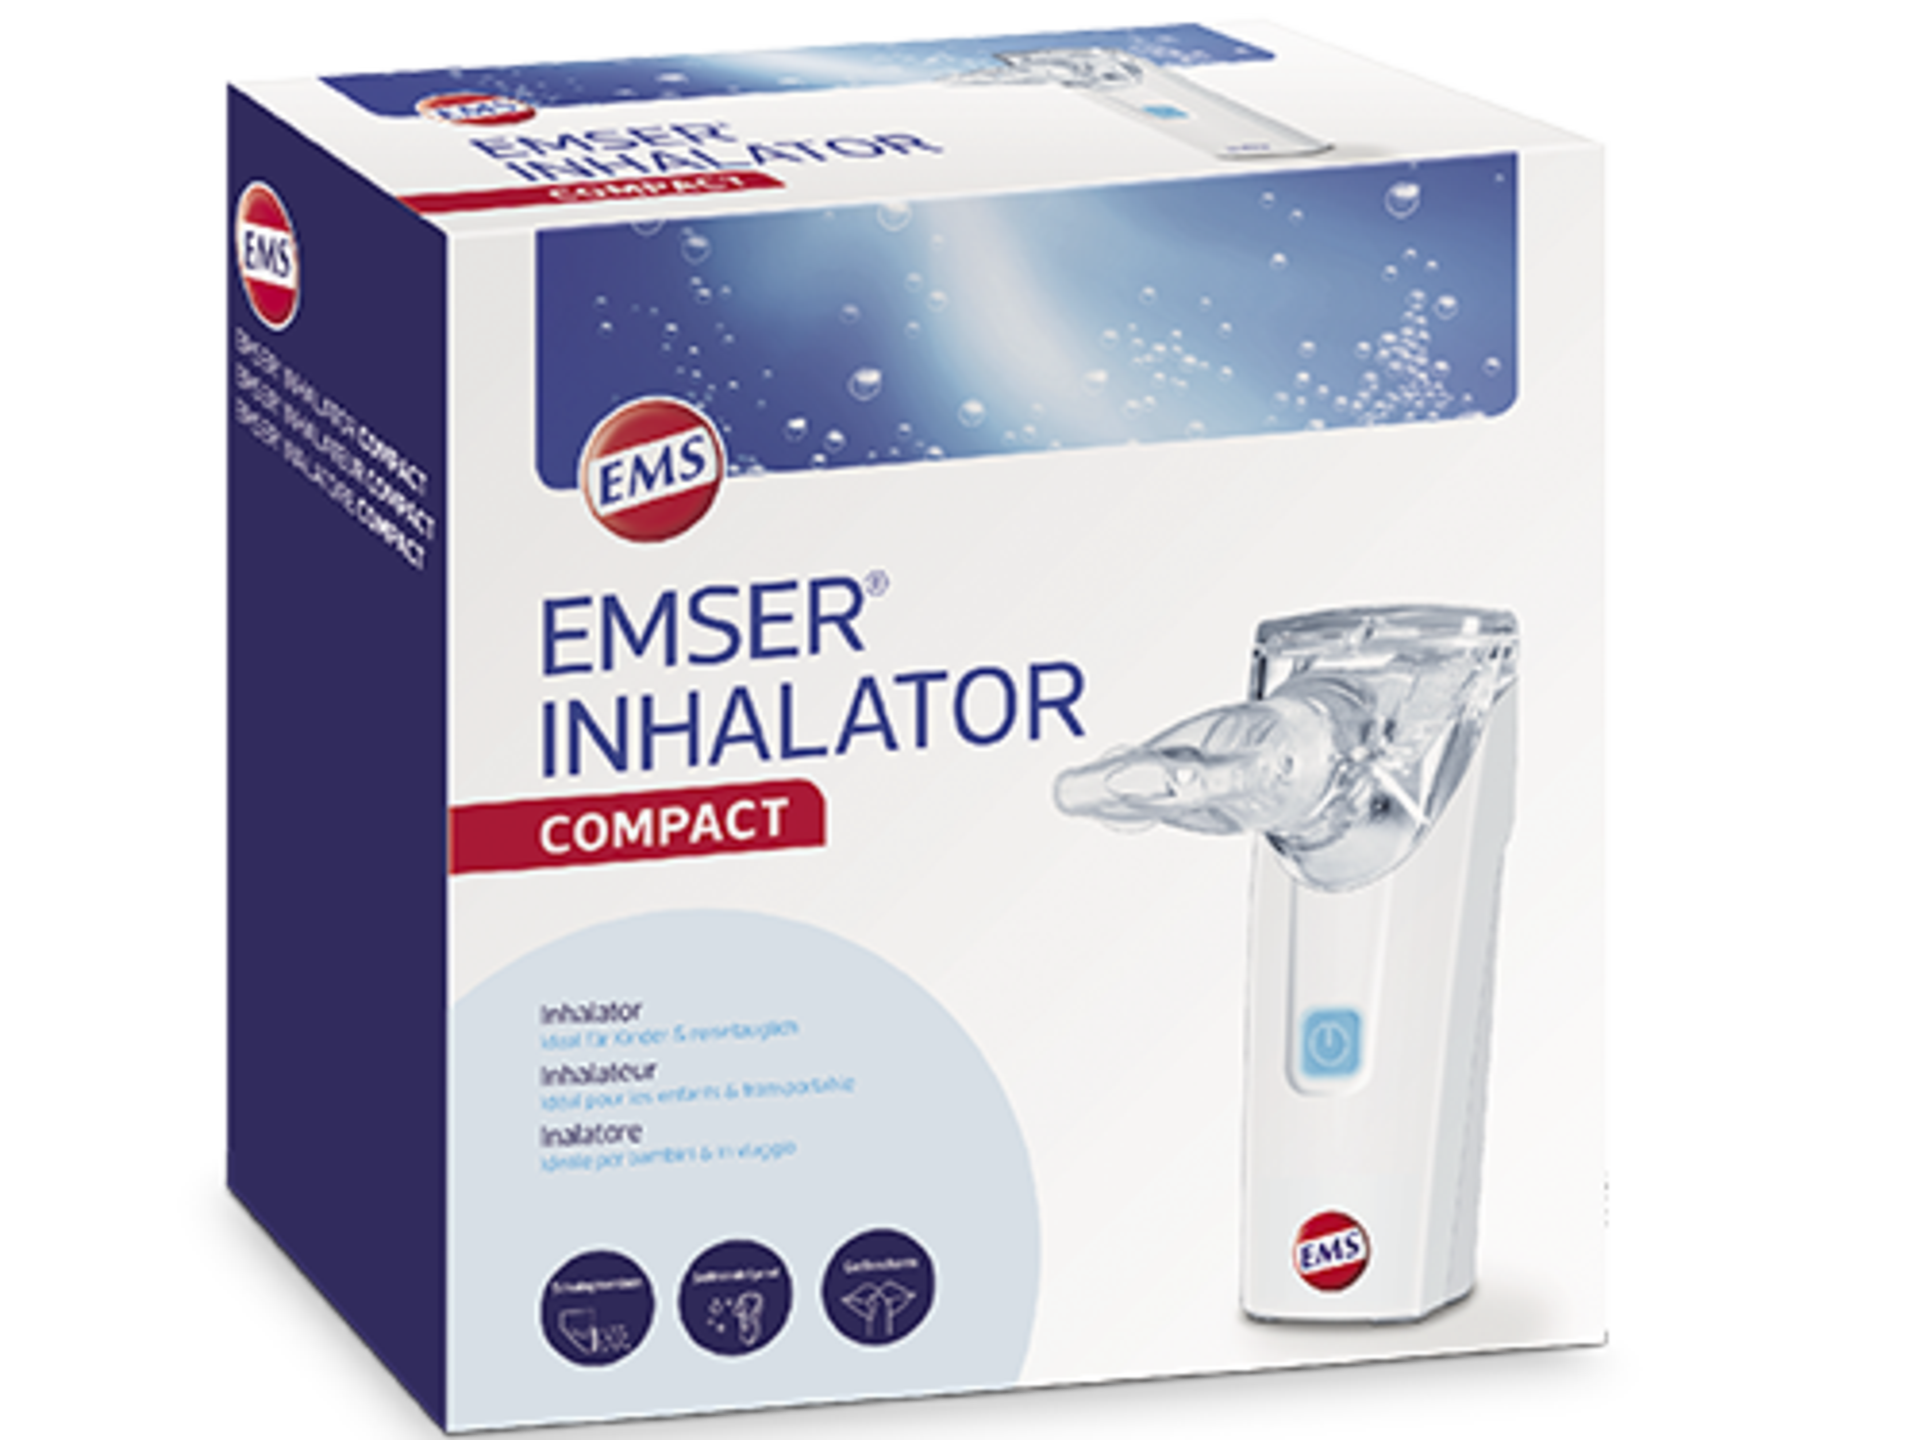 EMSER Inhalator Compact